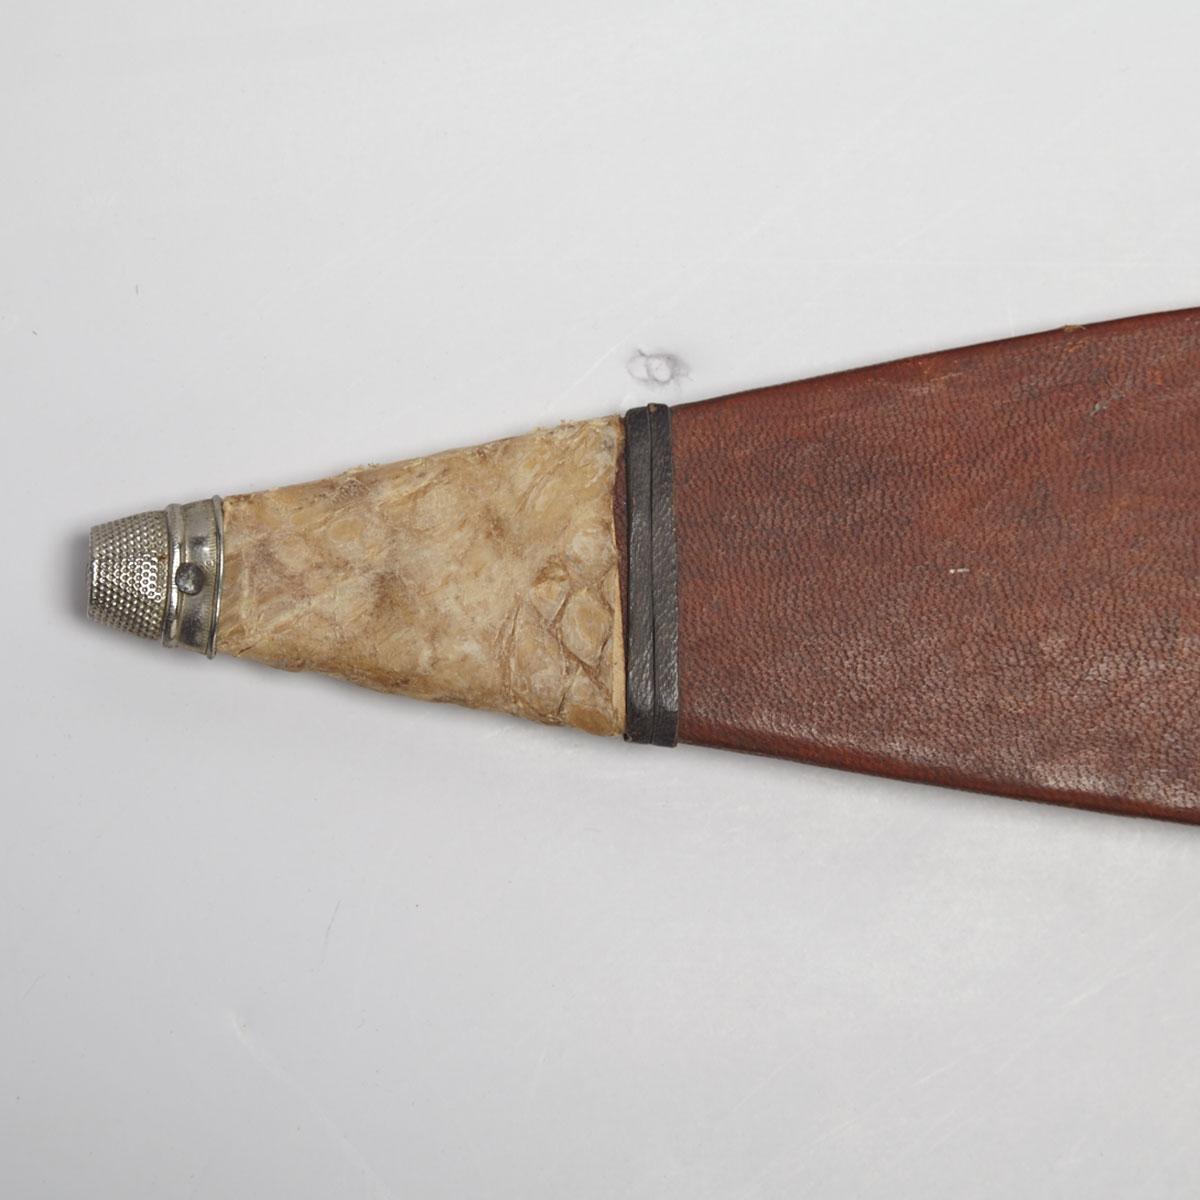 Sudanese Kaskara Sword, late 19th century